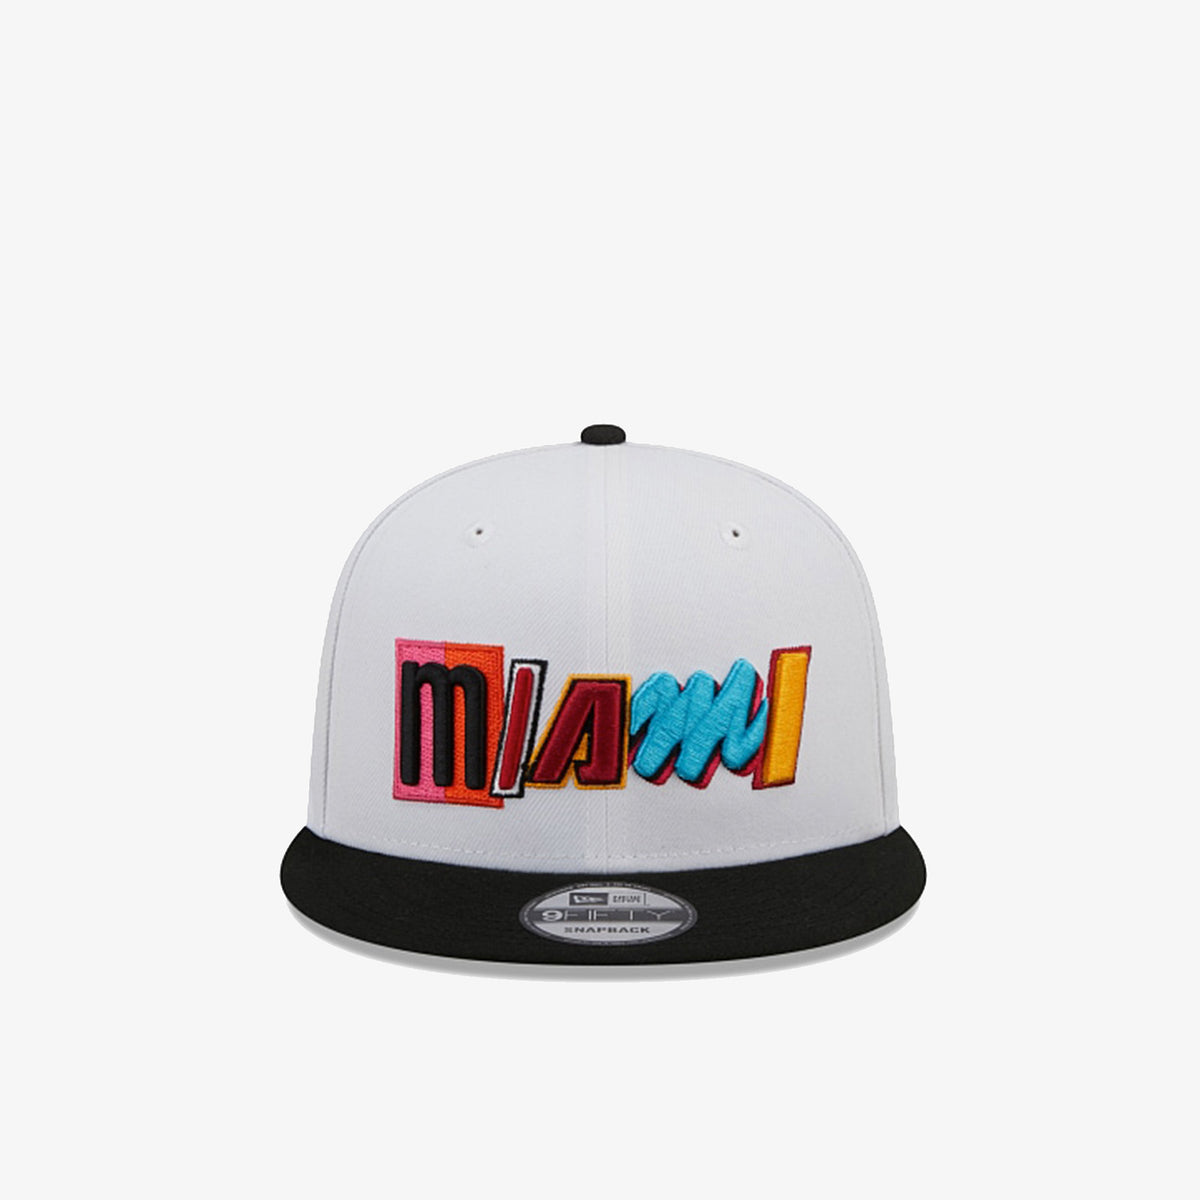 miami heat hat city edition